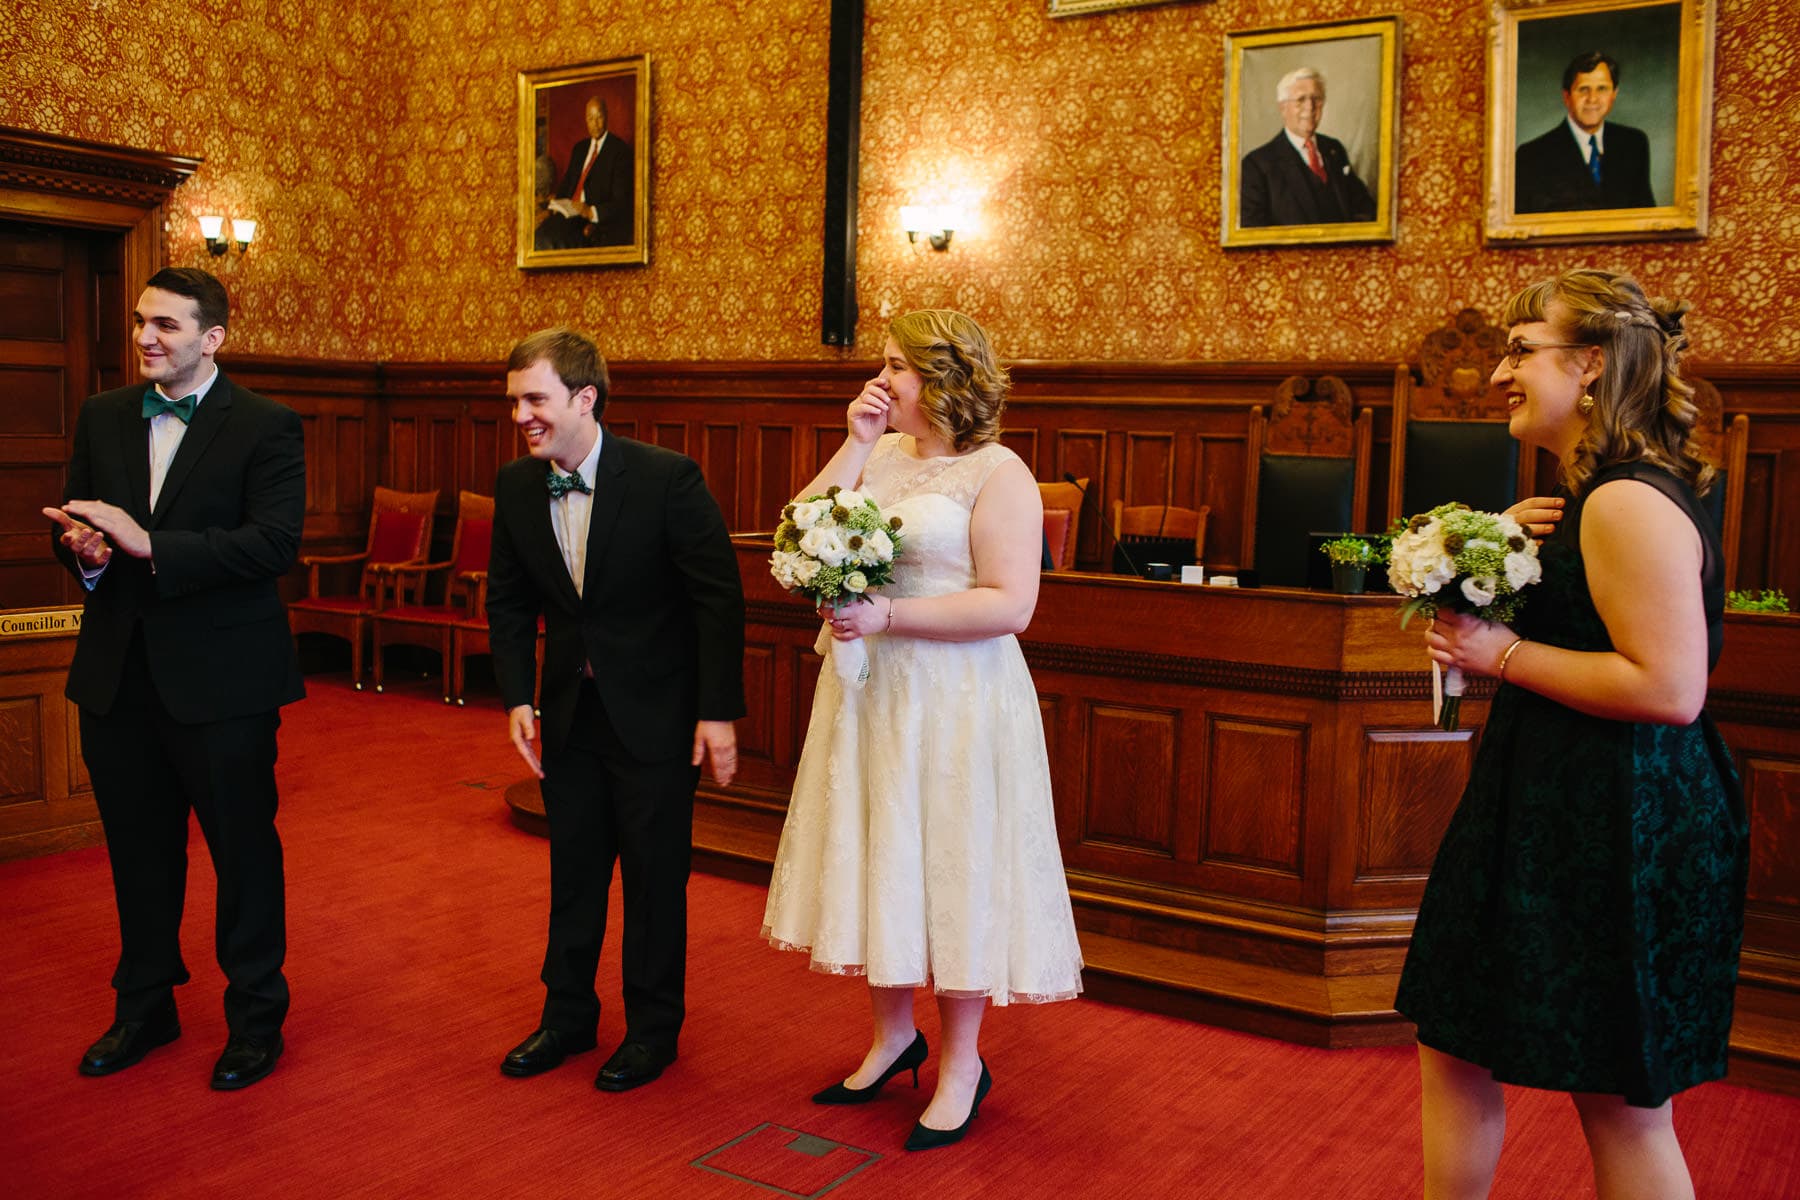 Cambridge City Hall wedding photography